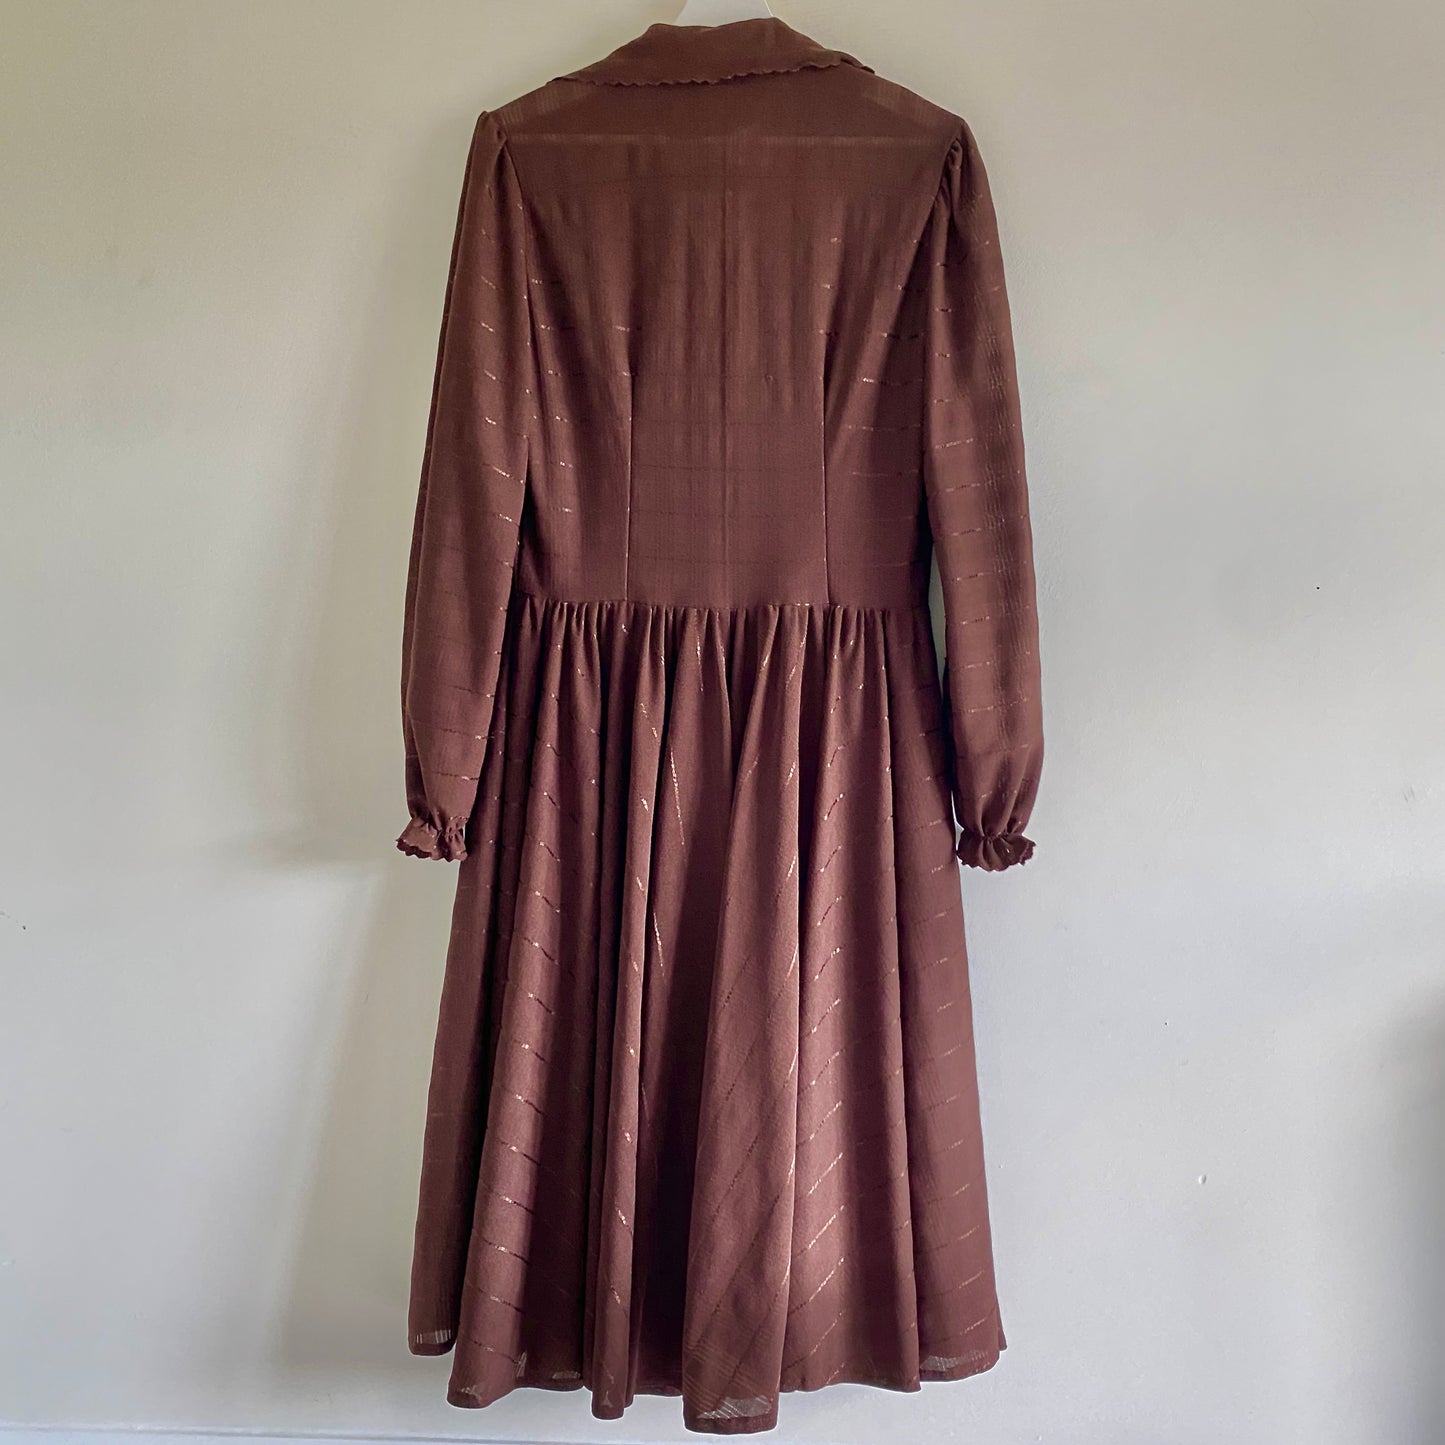 Handmade 70s Brown Dress